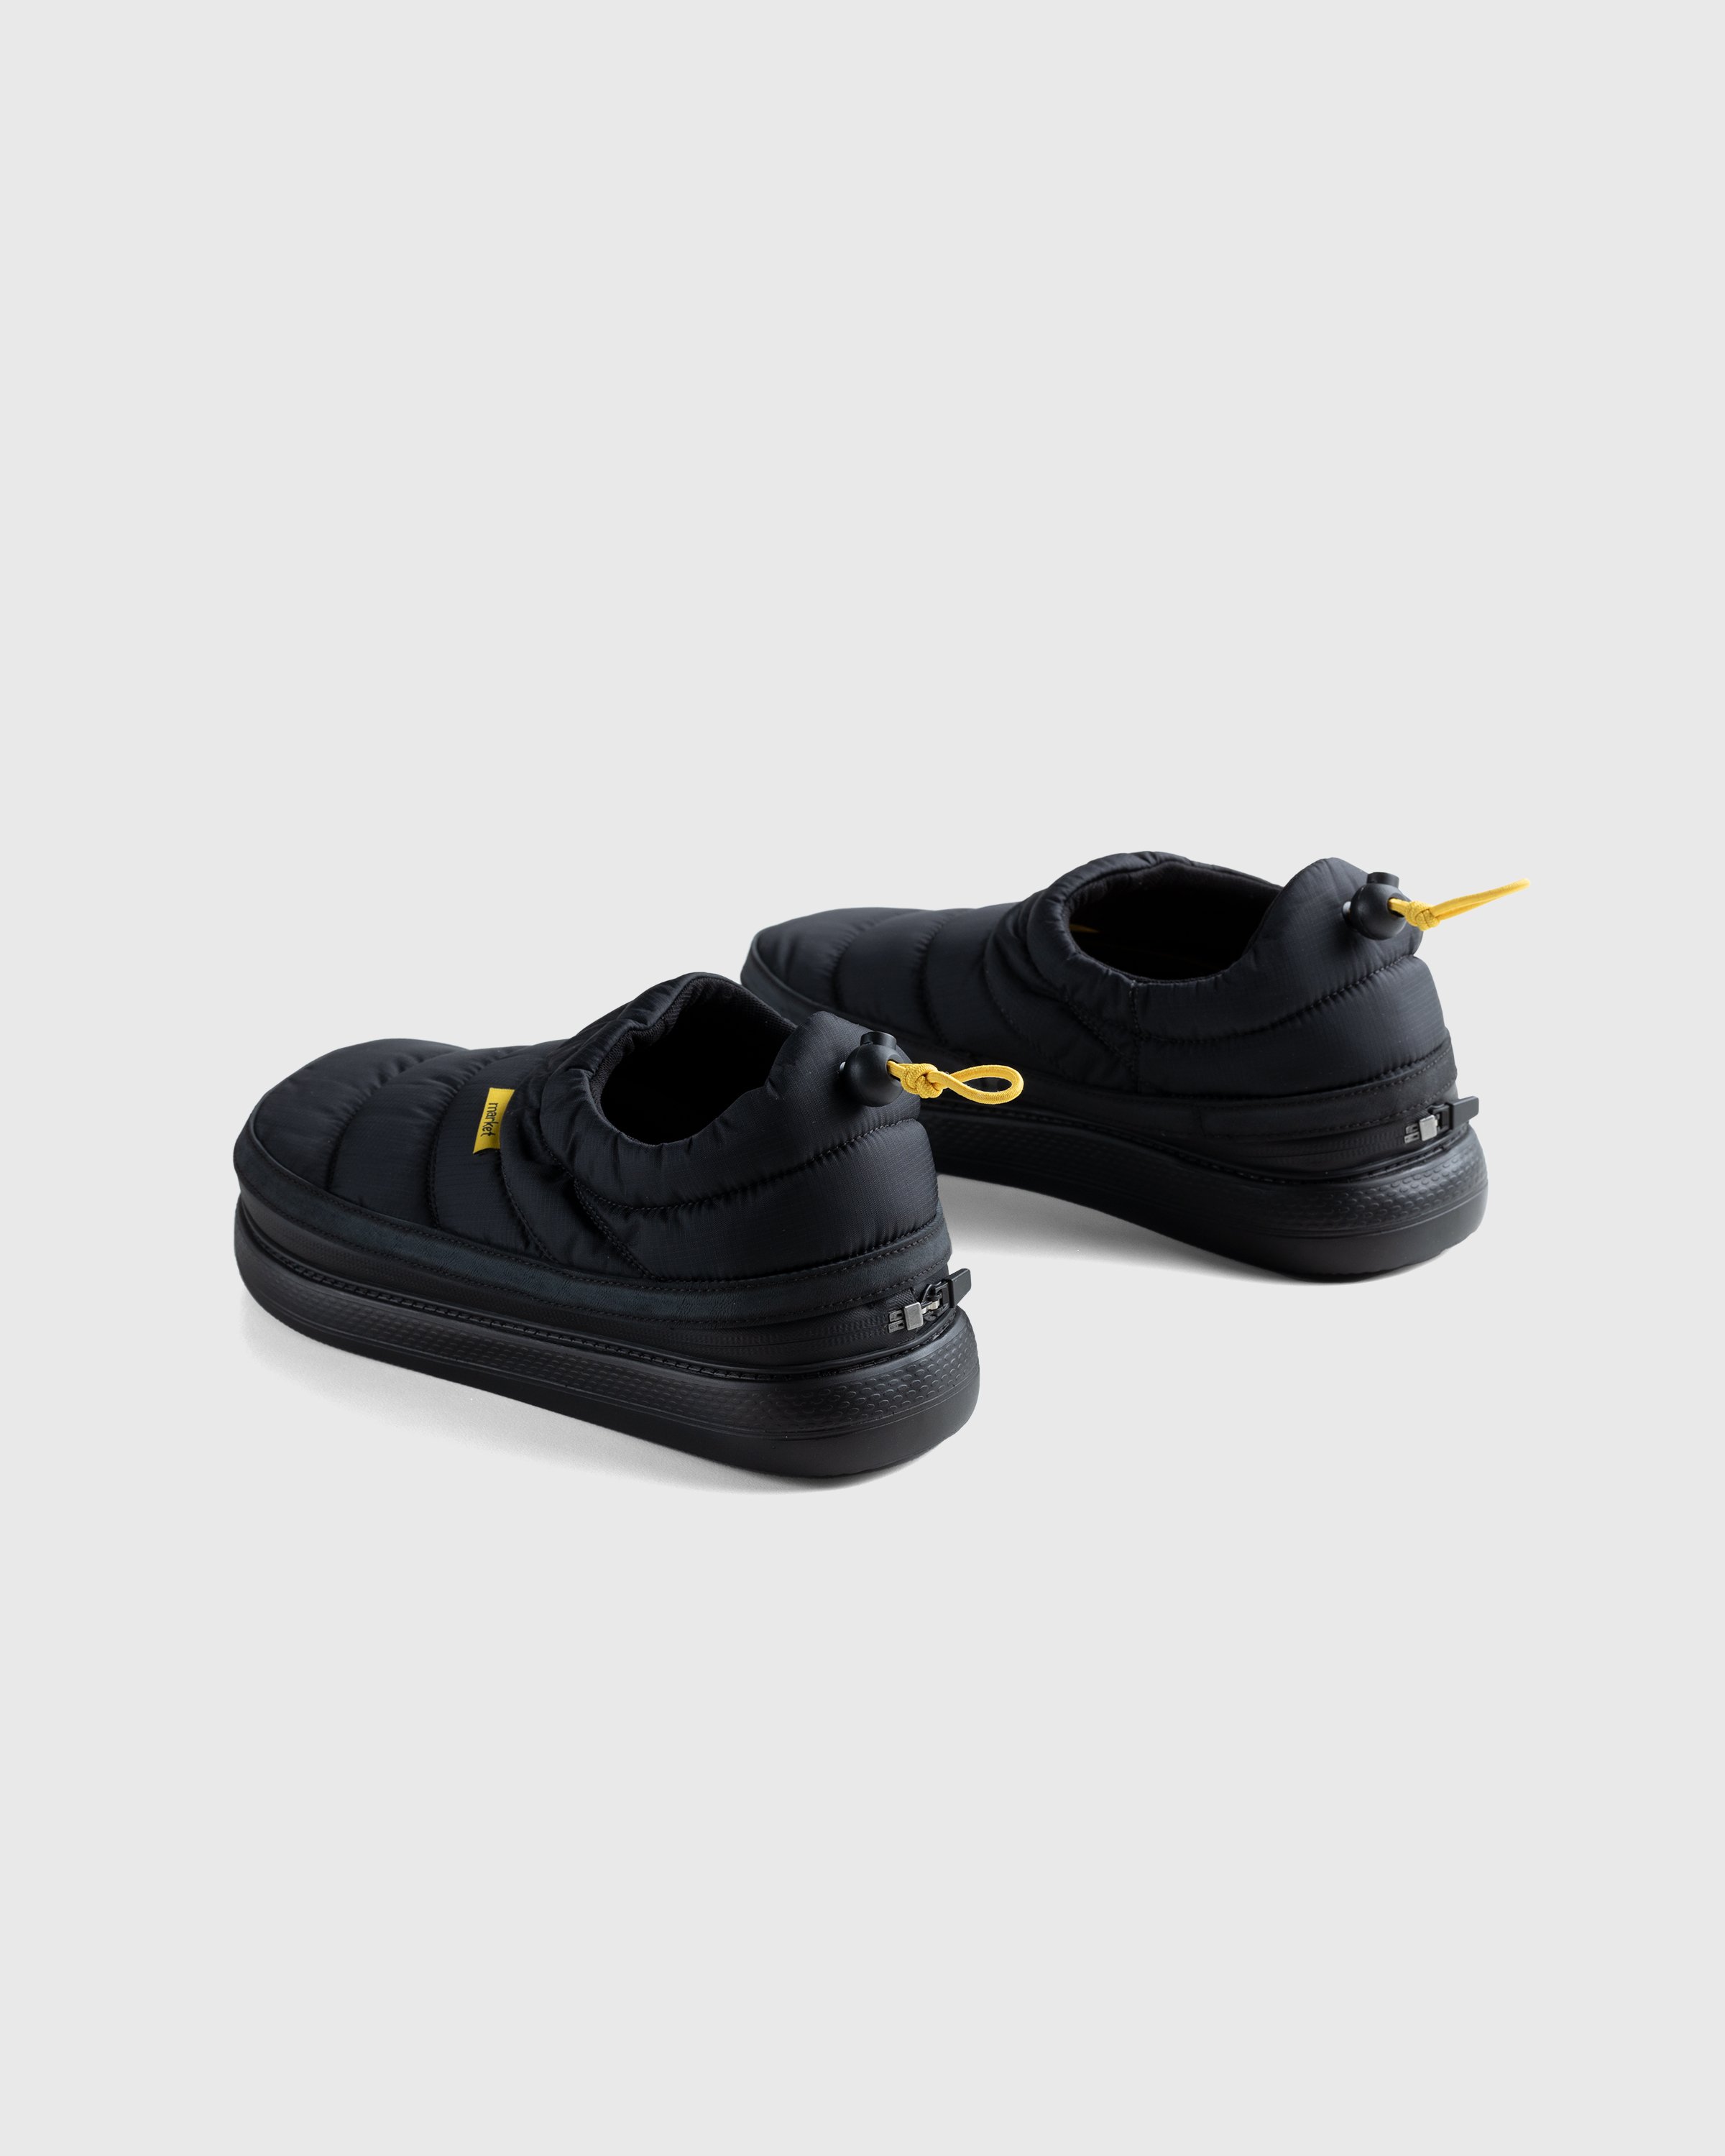 Market - Zip Top Black/Yellow - Footwear - Black - Image 4